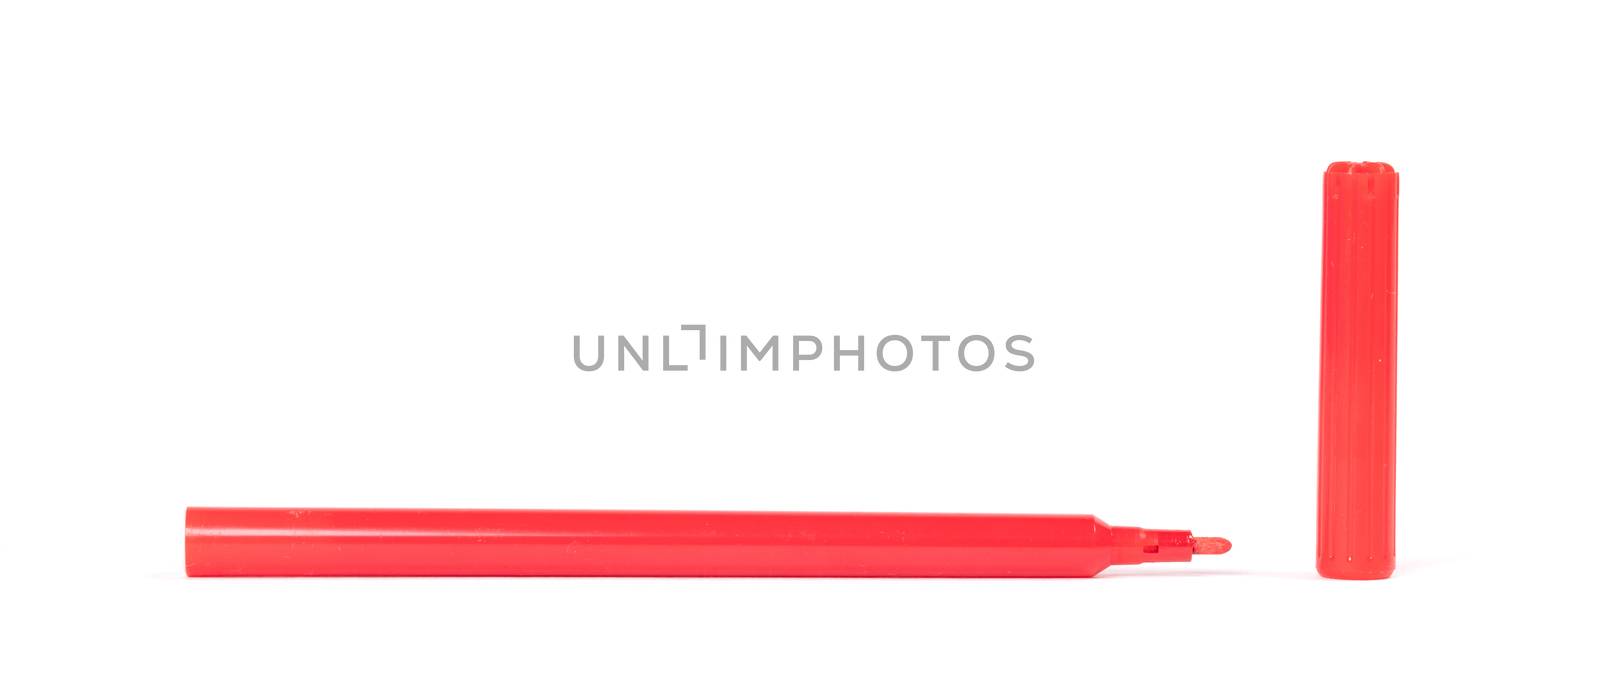 Red felt-tip pen isolated on white background